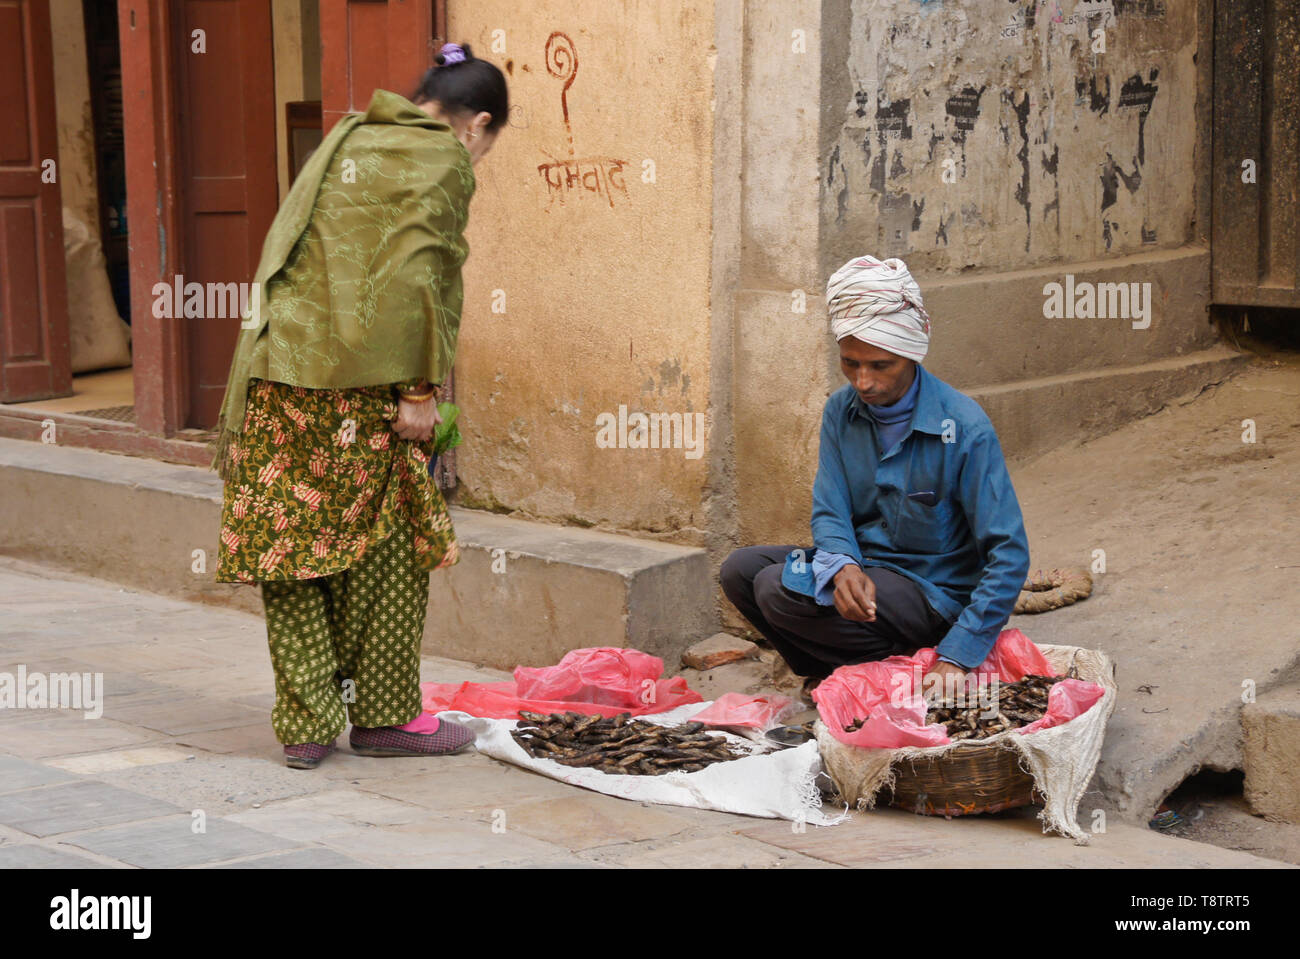 Street vendor selling dried fish to woman in traditional dress, Kathmandu, Nepal Stock Photo